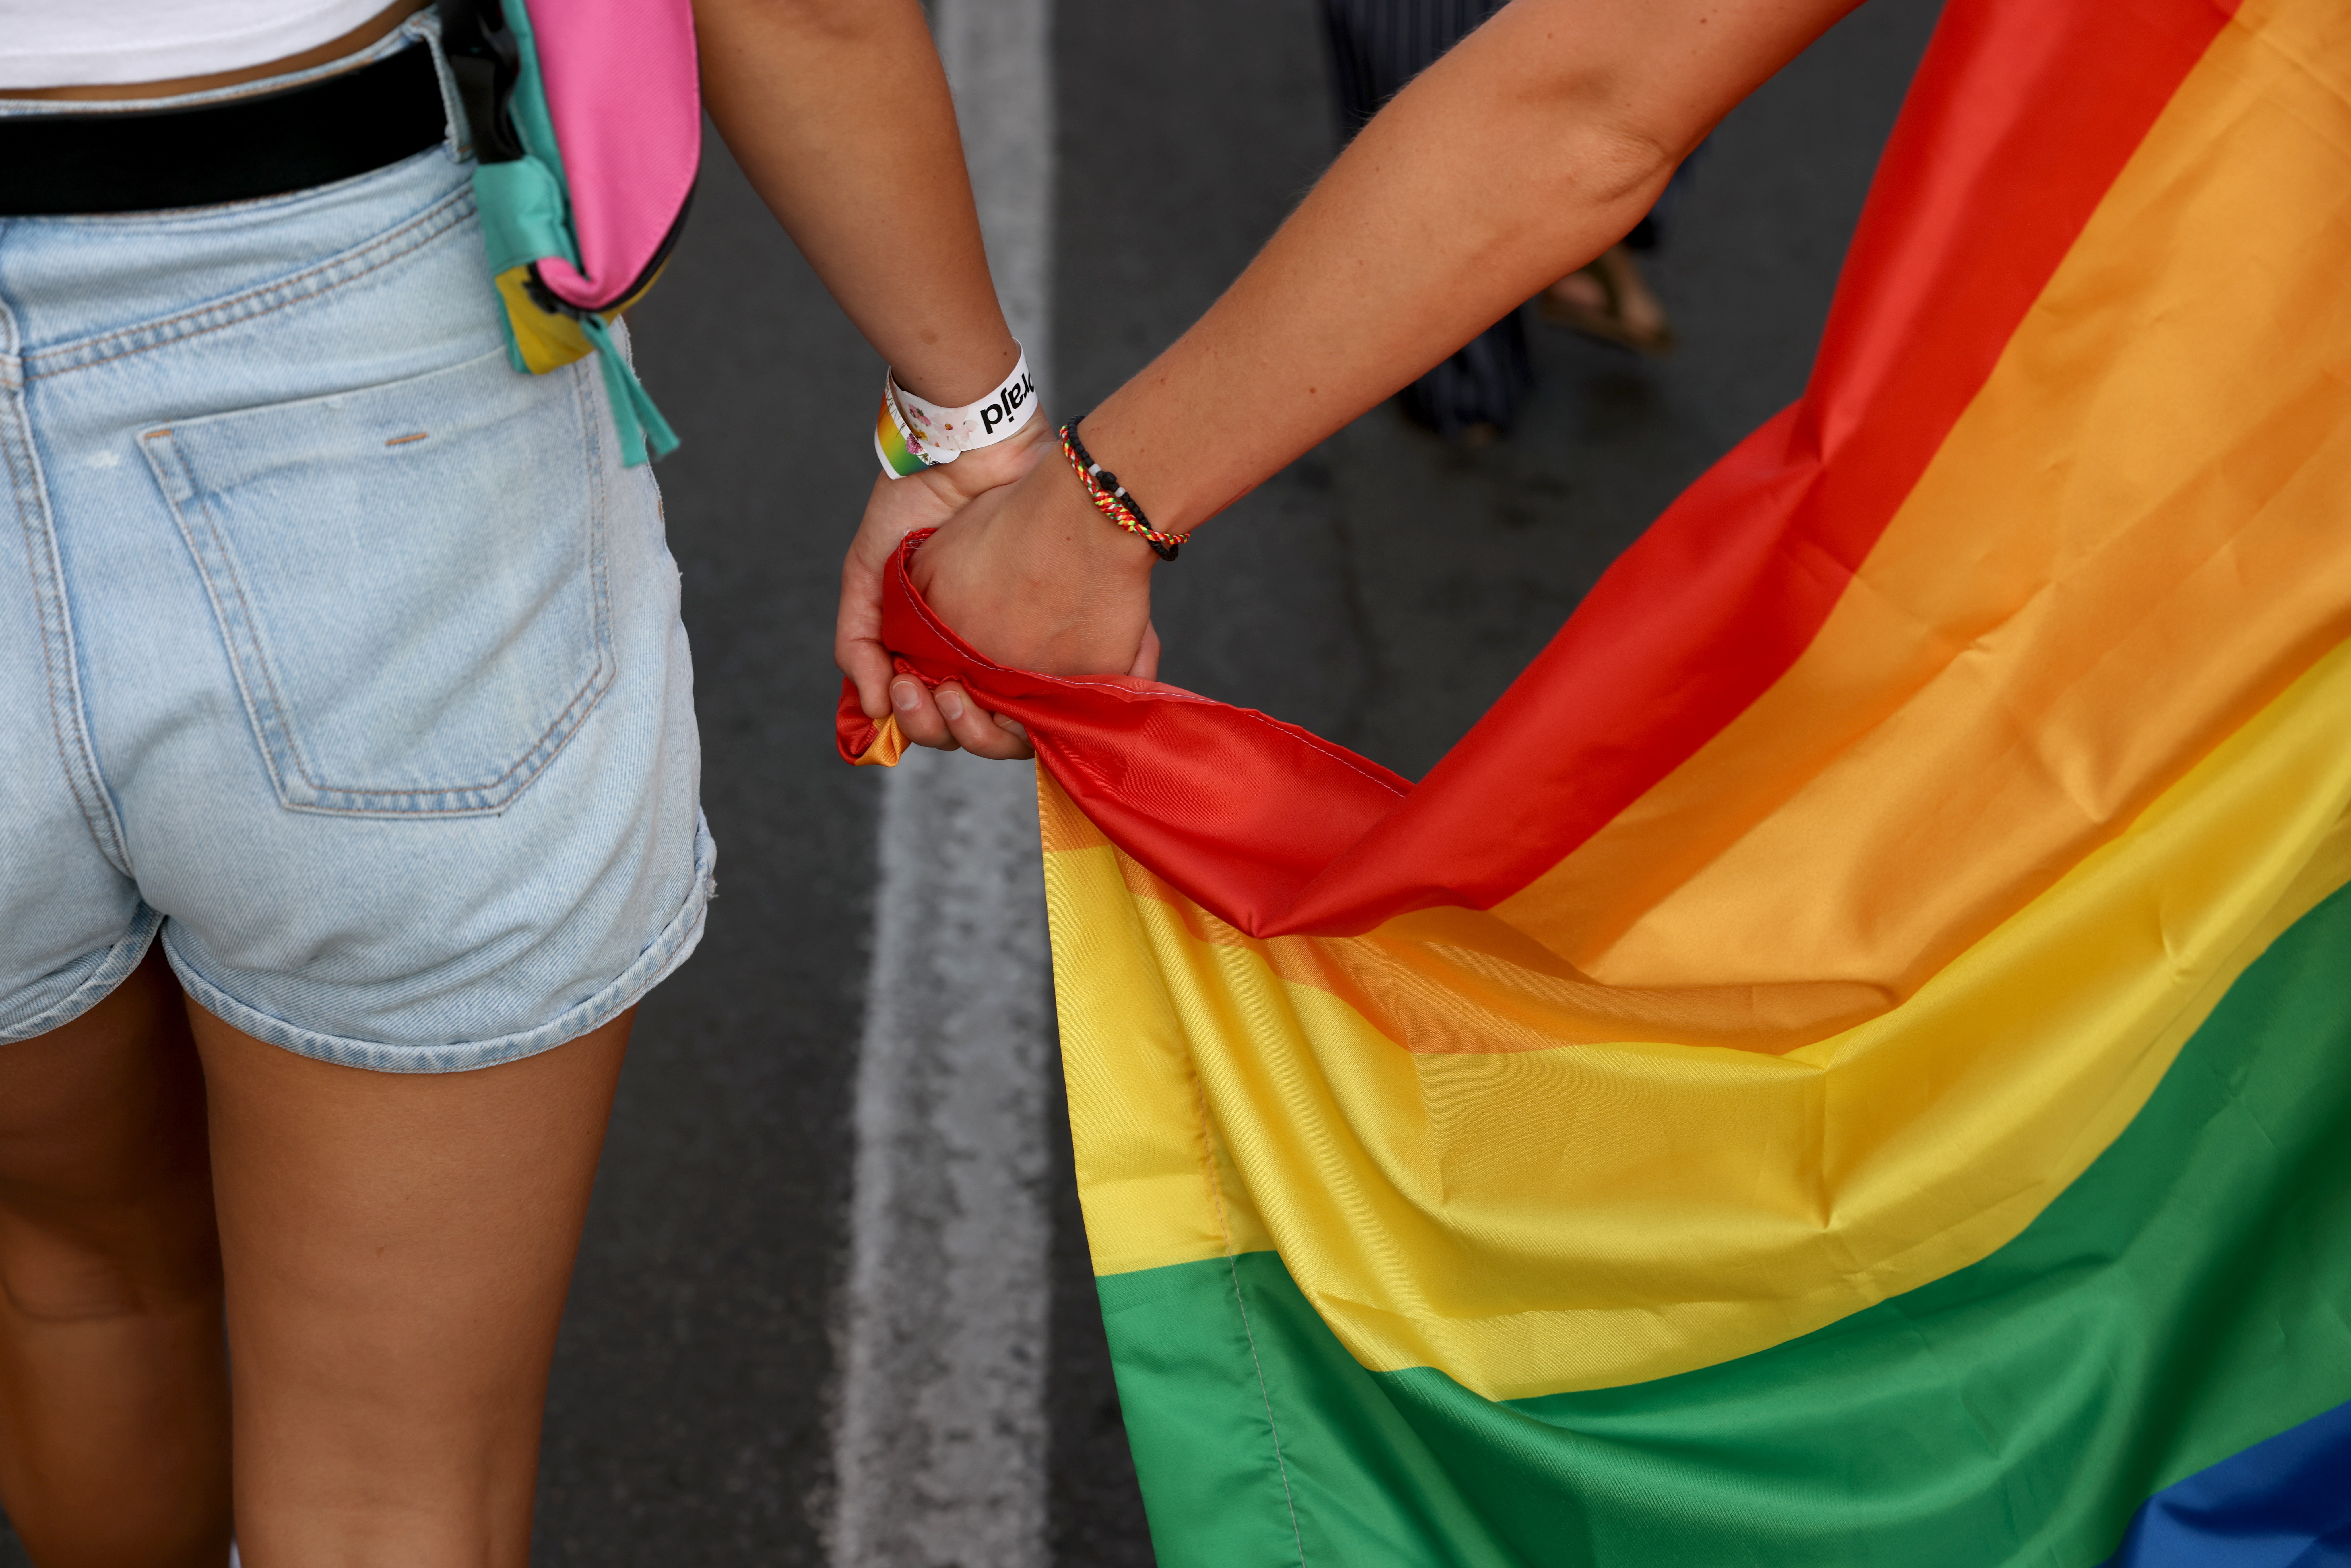 "Promovisanje netradicionalnih odnosa" Bjelorusija pripremila nacrt zakona protiv LGBT